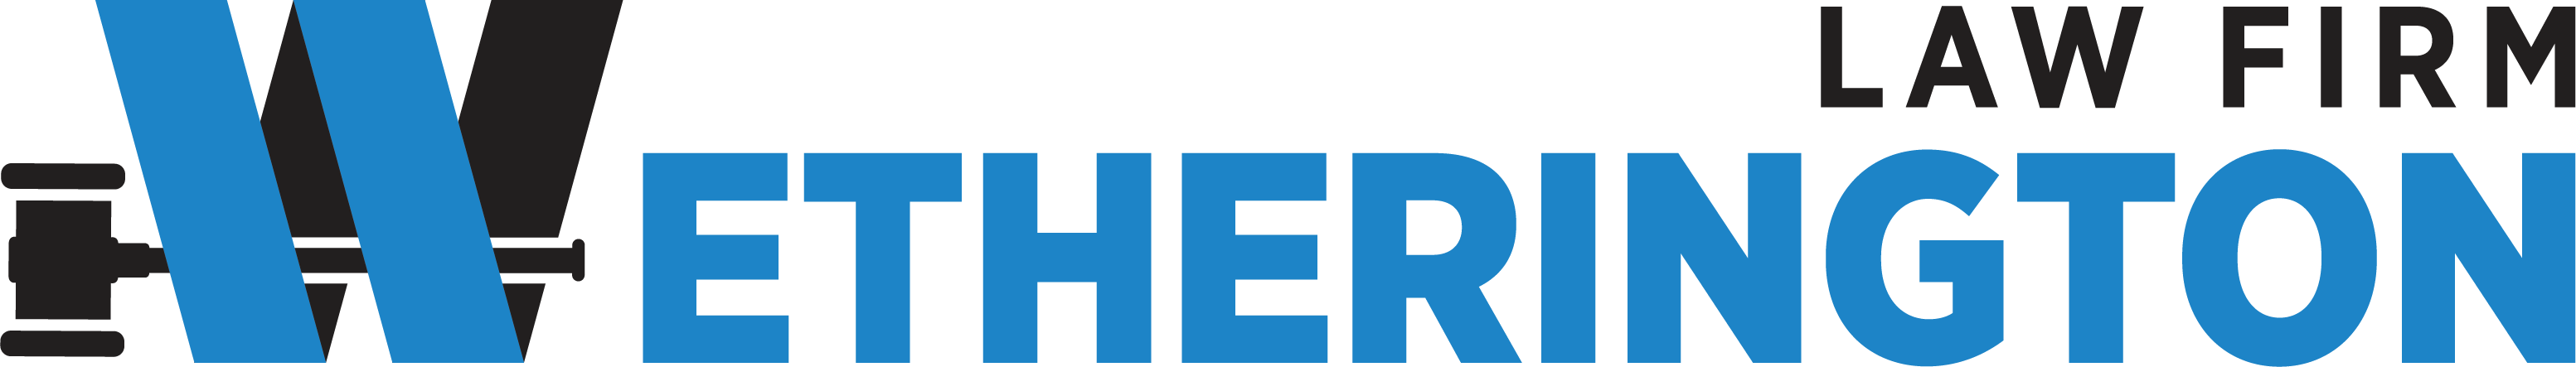 Wetherington Law Firm logo.